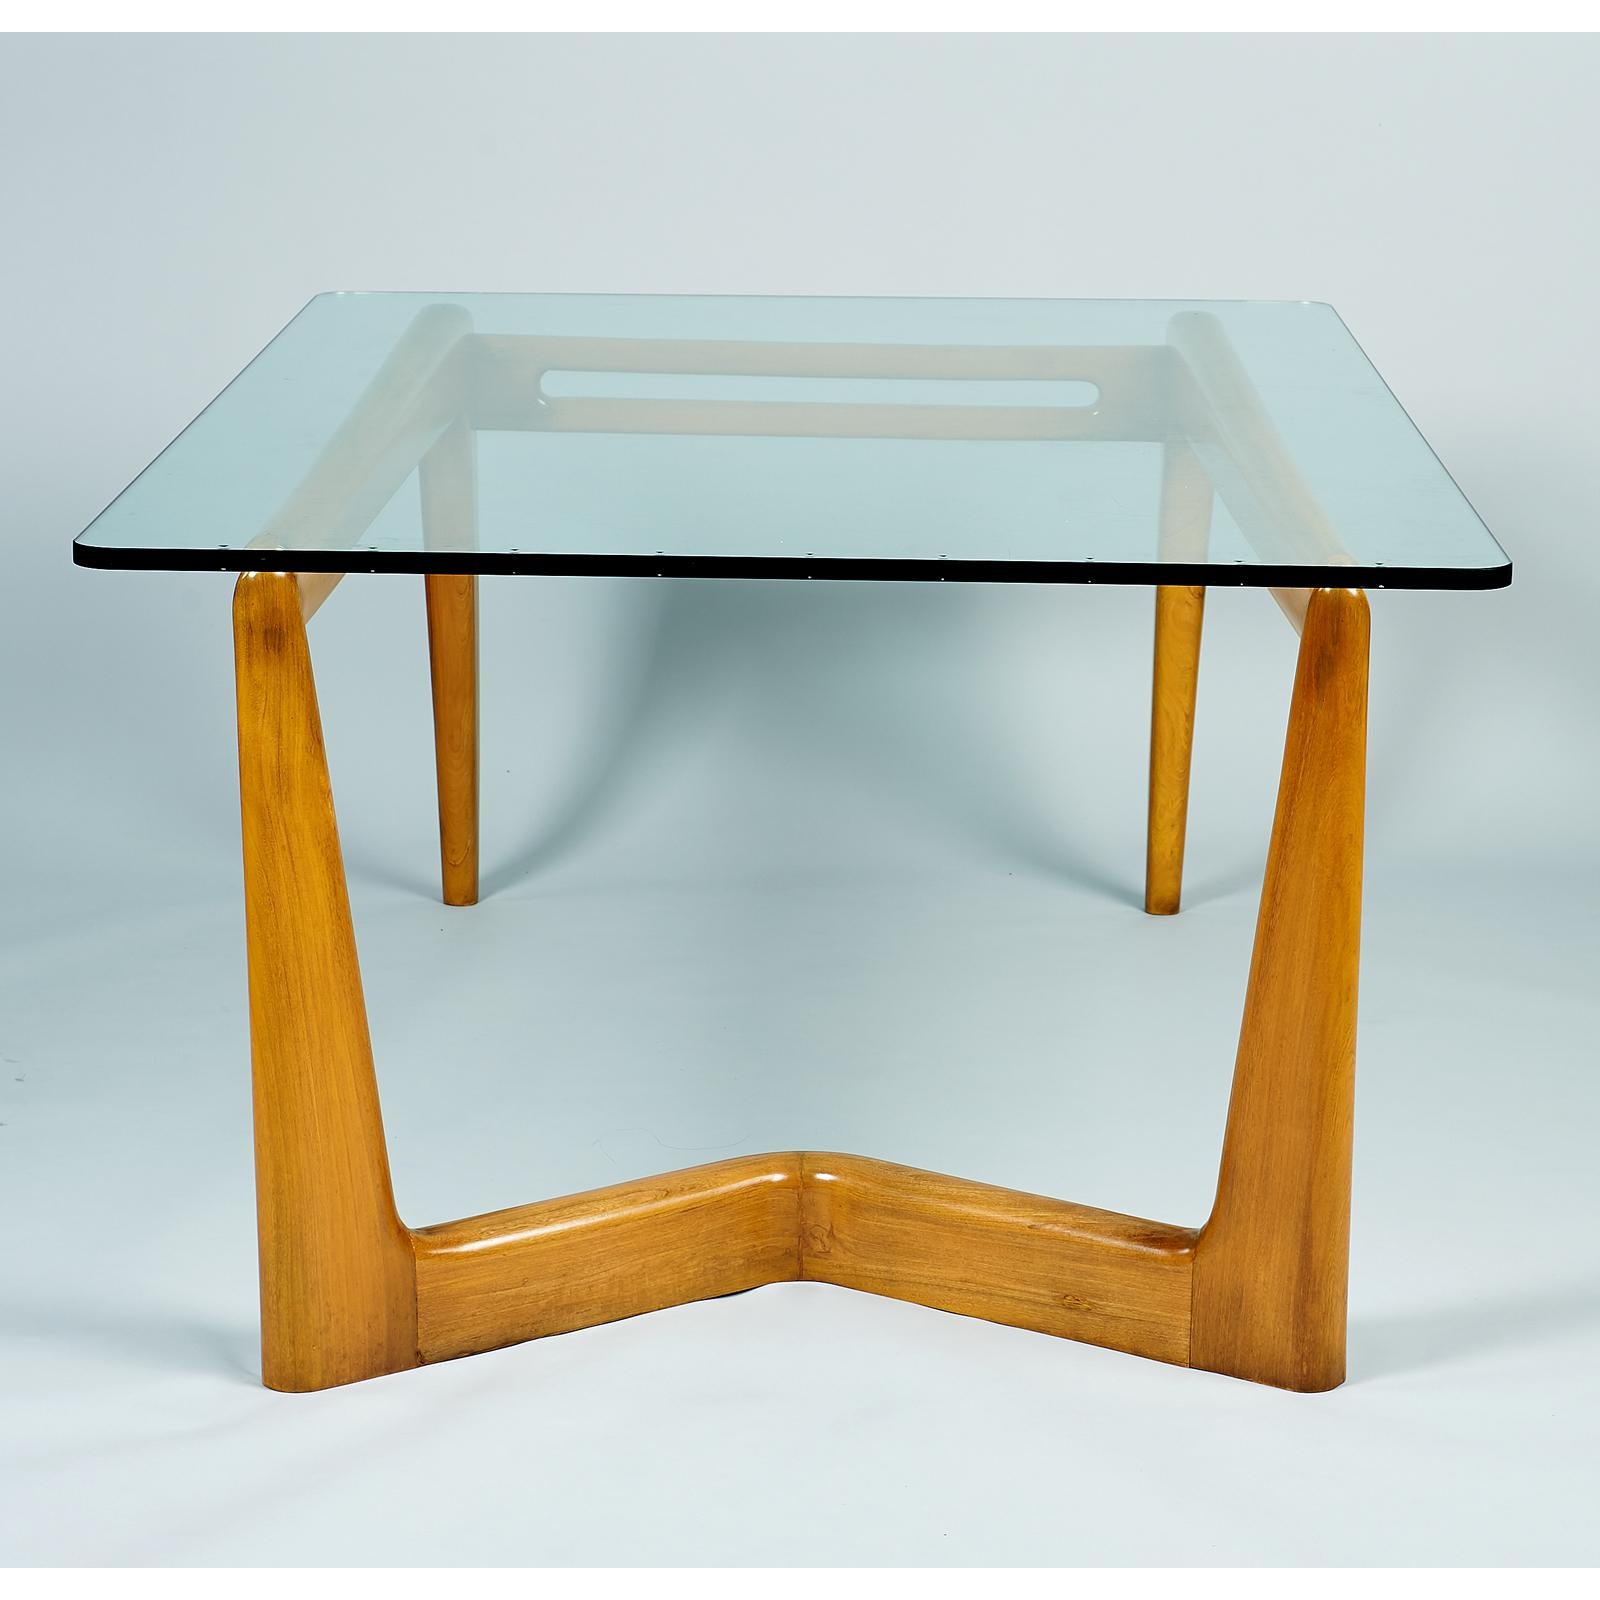 Pierluigi Giordani Monumental Biomorphic Dining Table, Wood + Glass, Italy 1950s For Sale 1